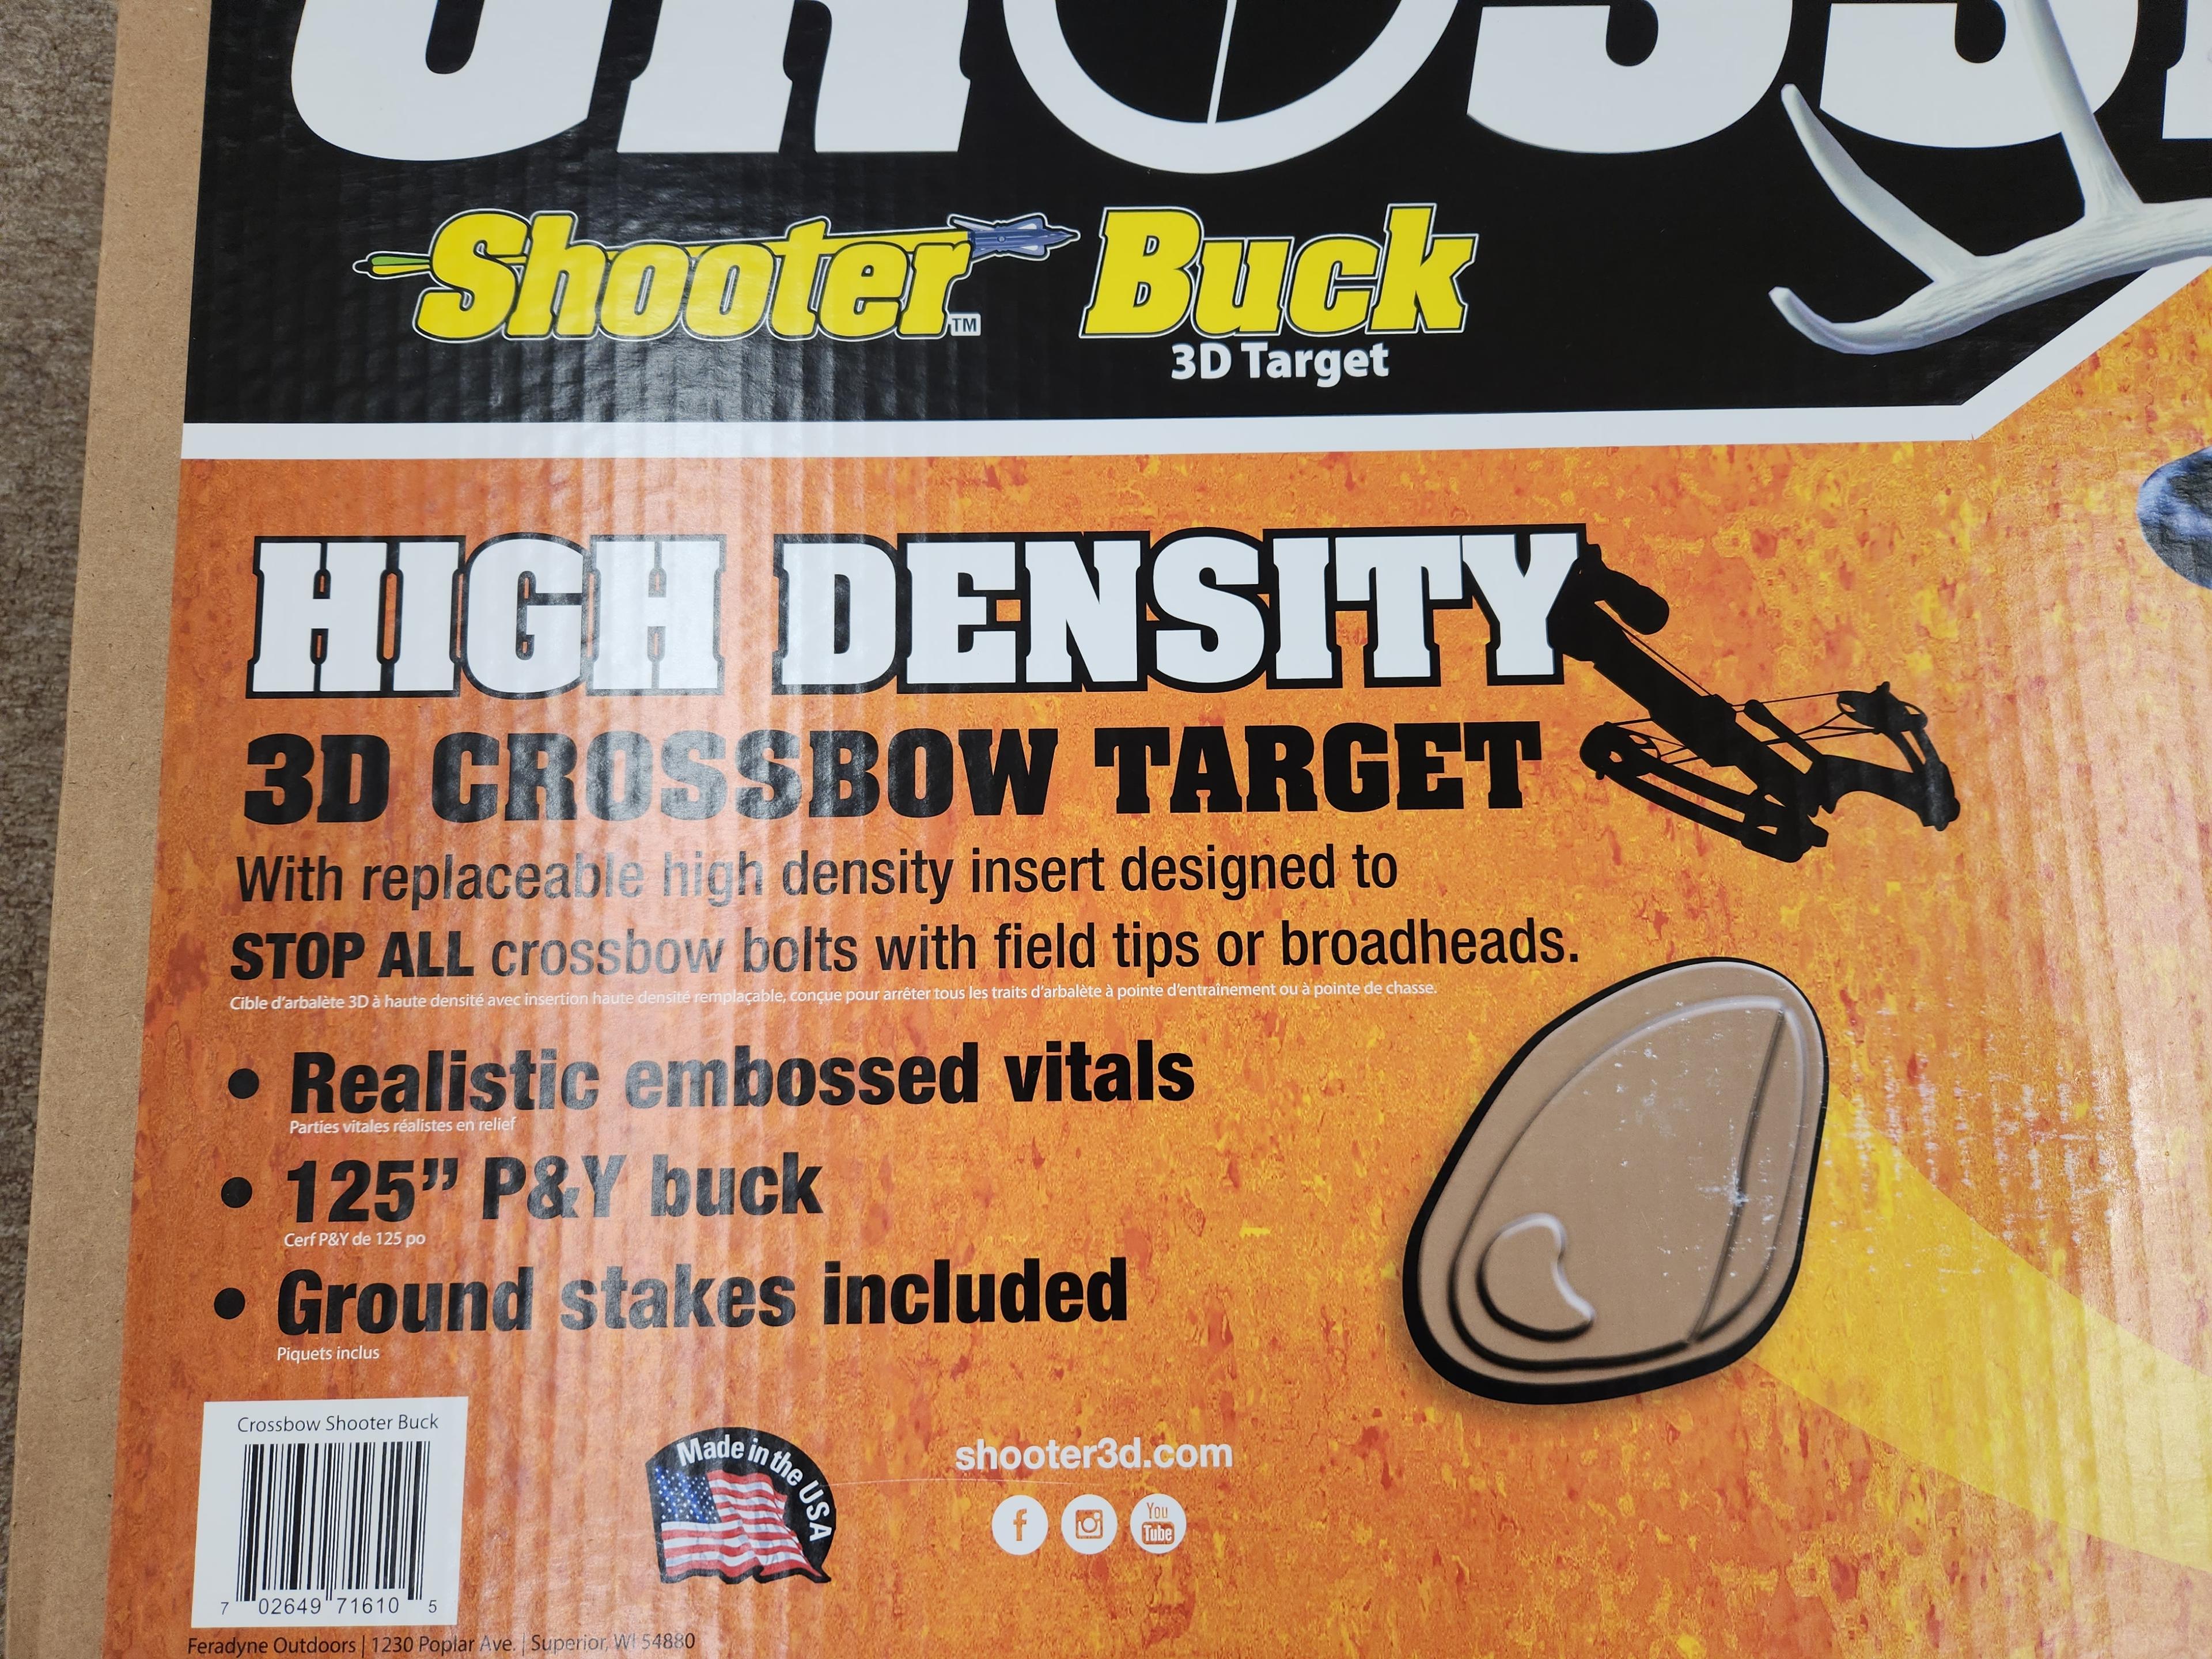 CROSSBOW SHOOTER BUCK ARCHERY TARGET